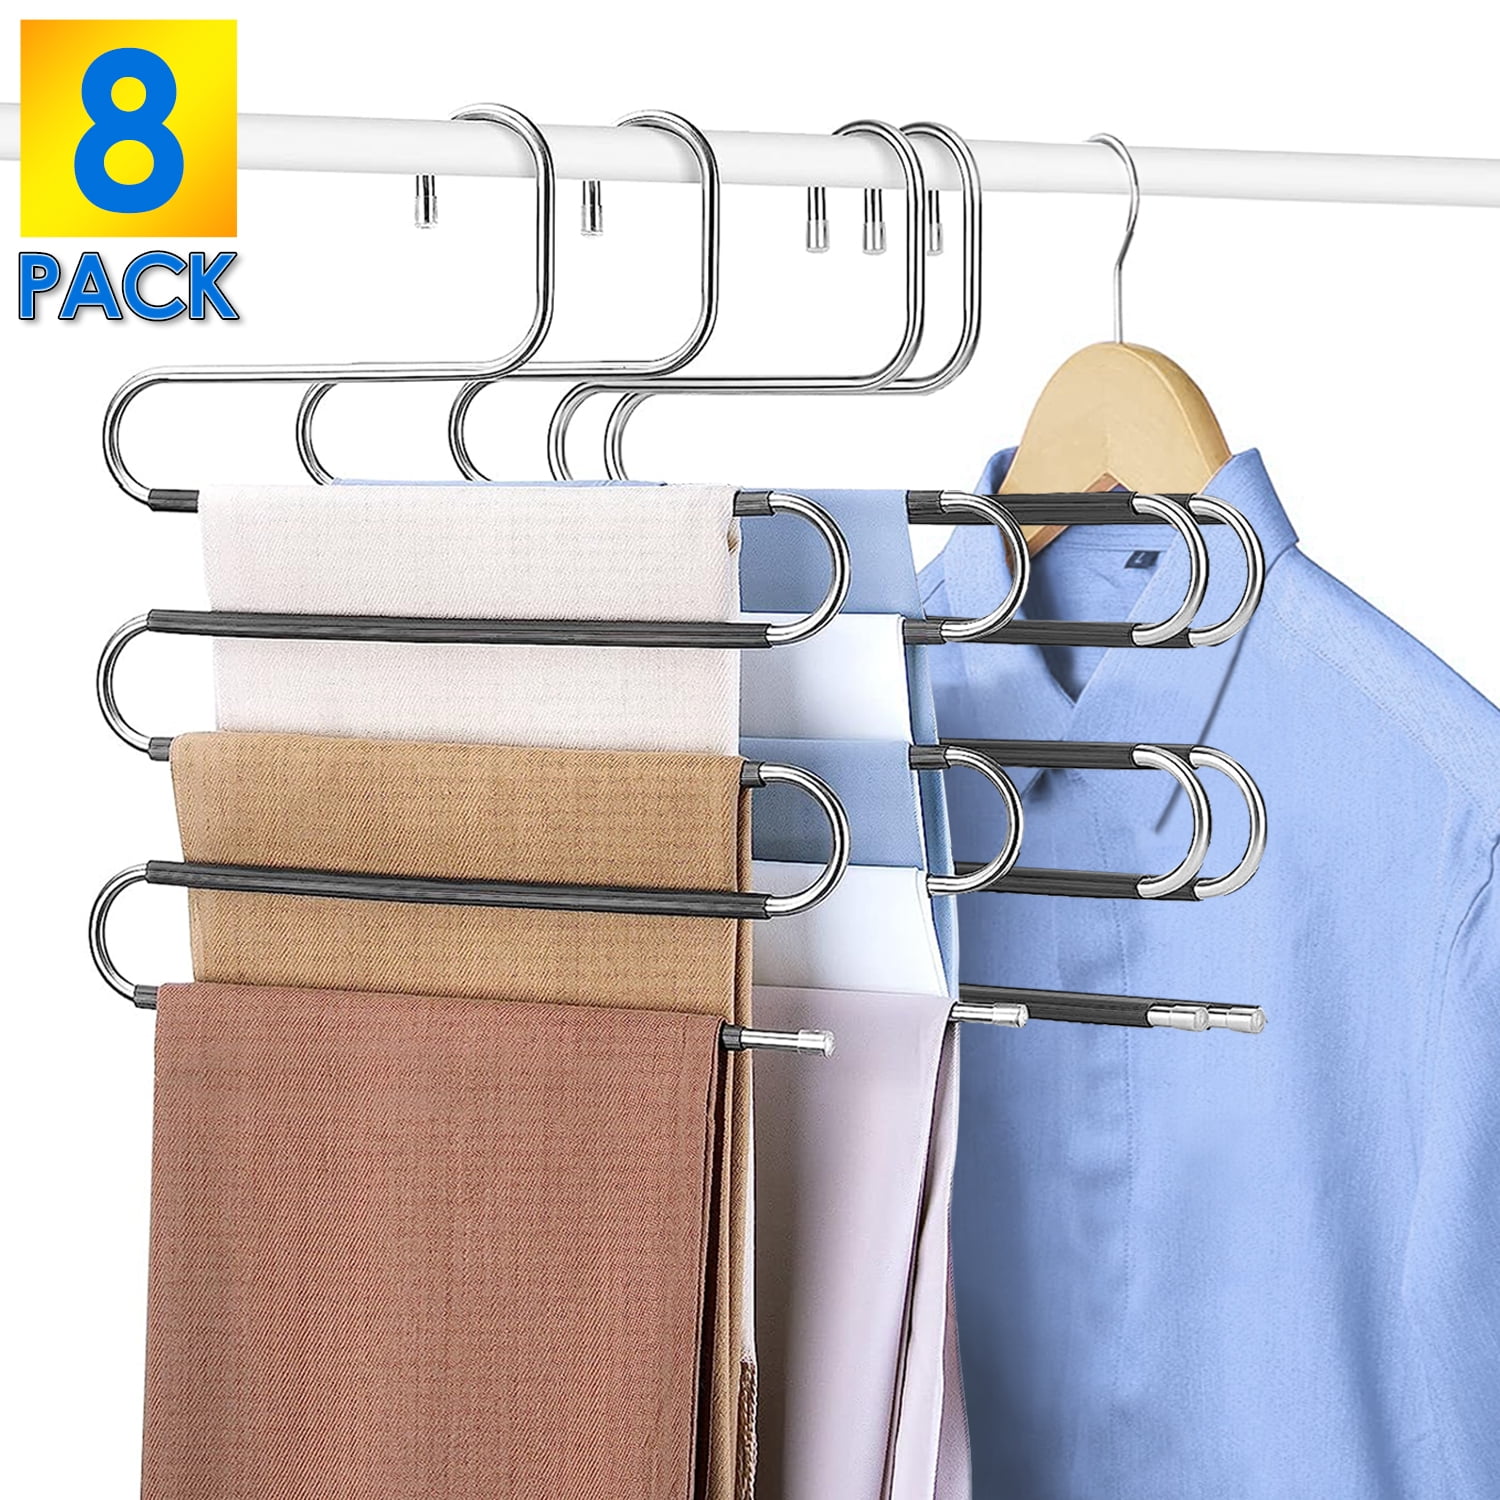 8 Pack Pants Hangers Space Saving, 5 Layers S-Shape Non-Slip Hangers ...